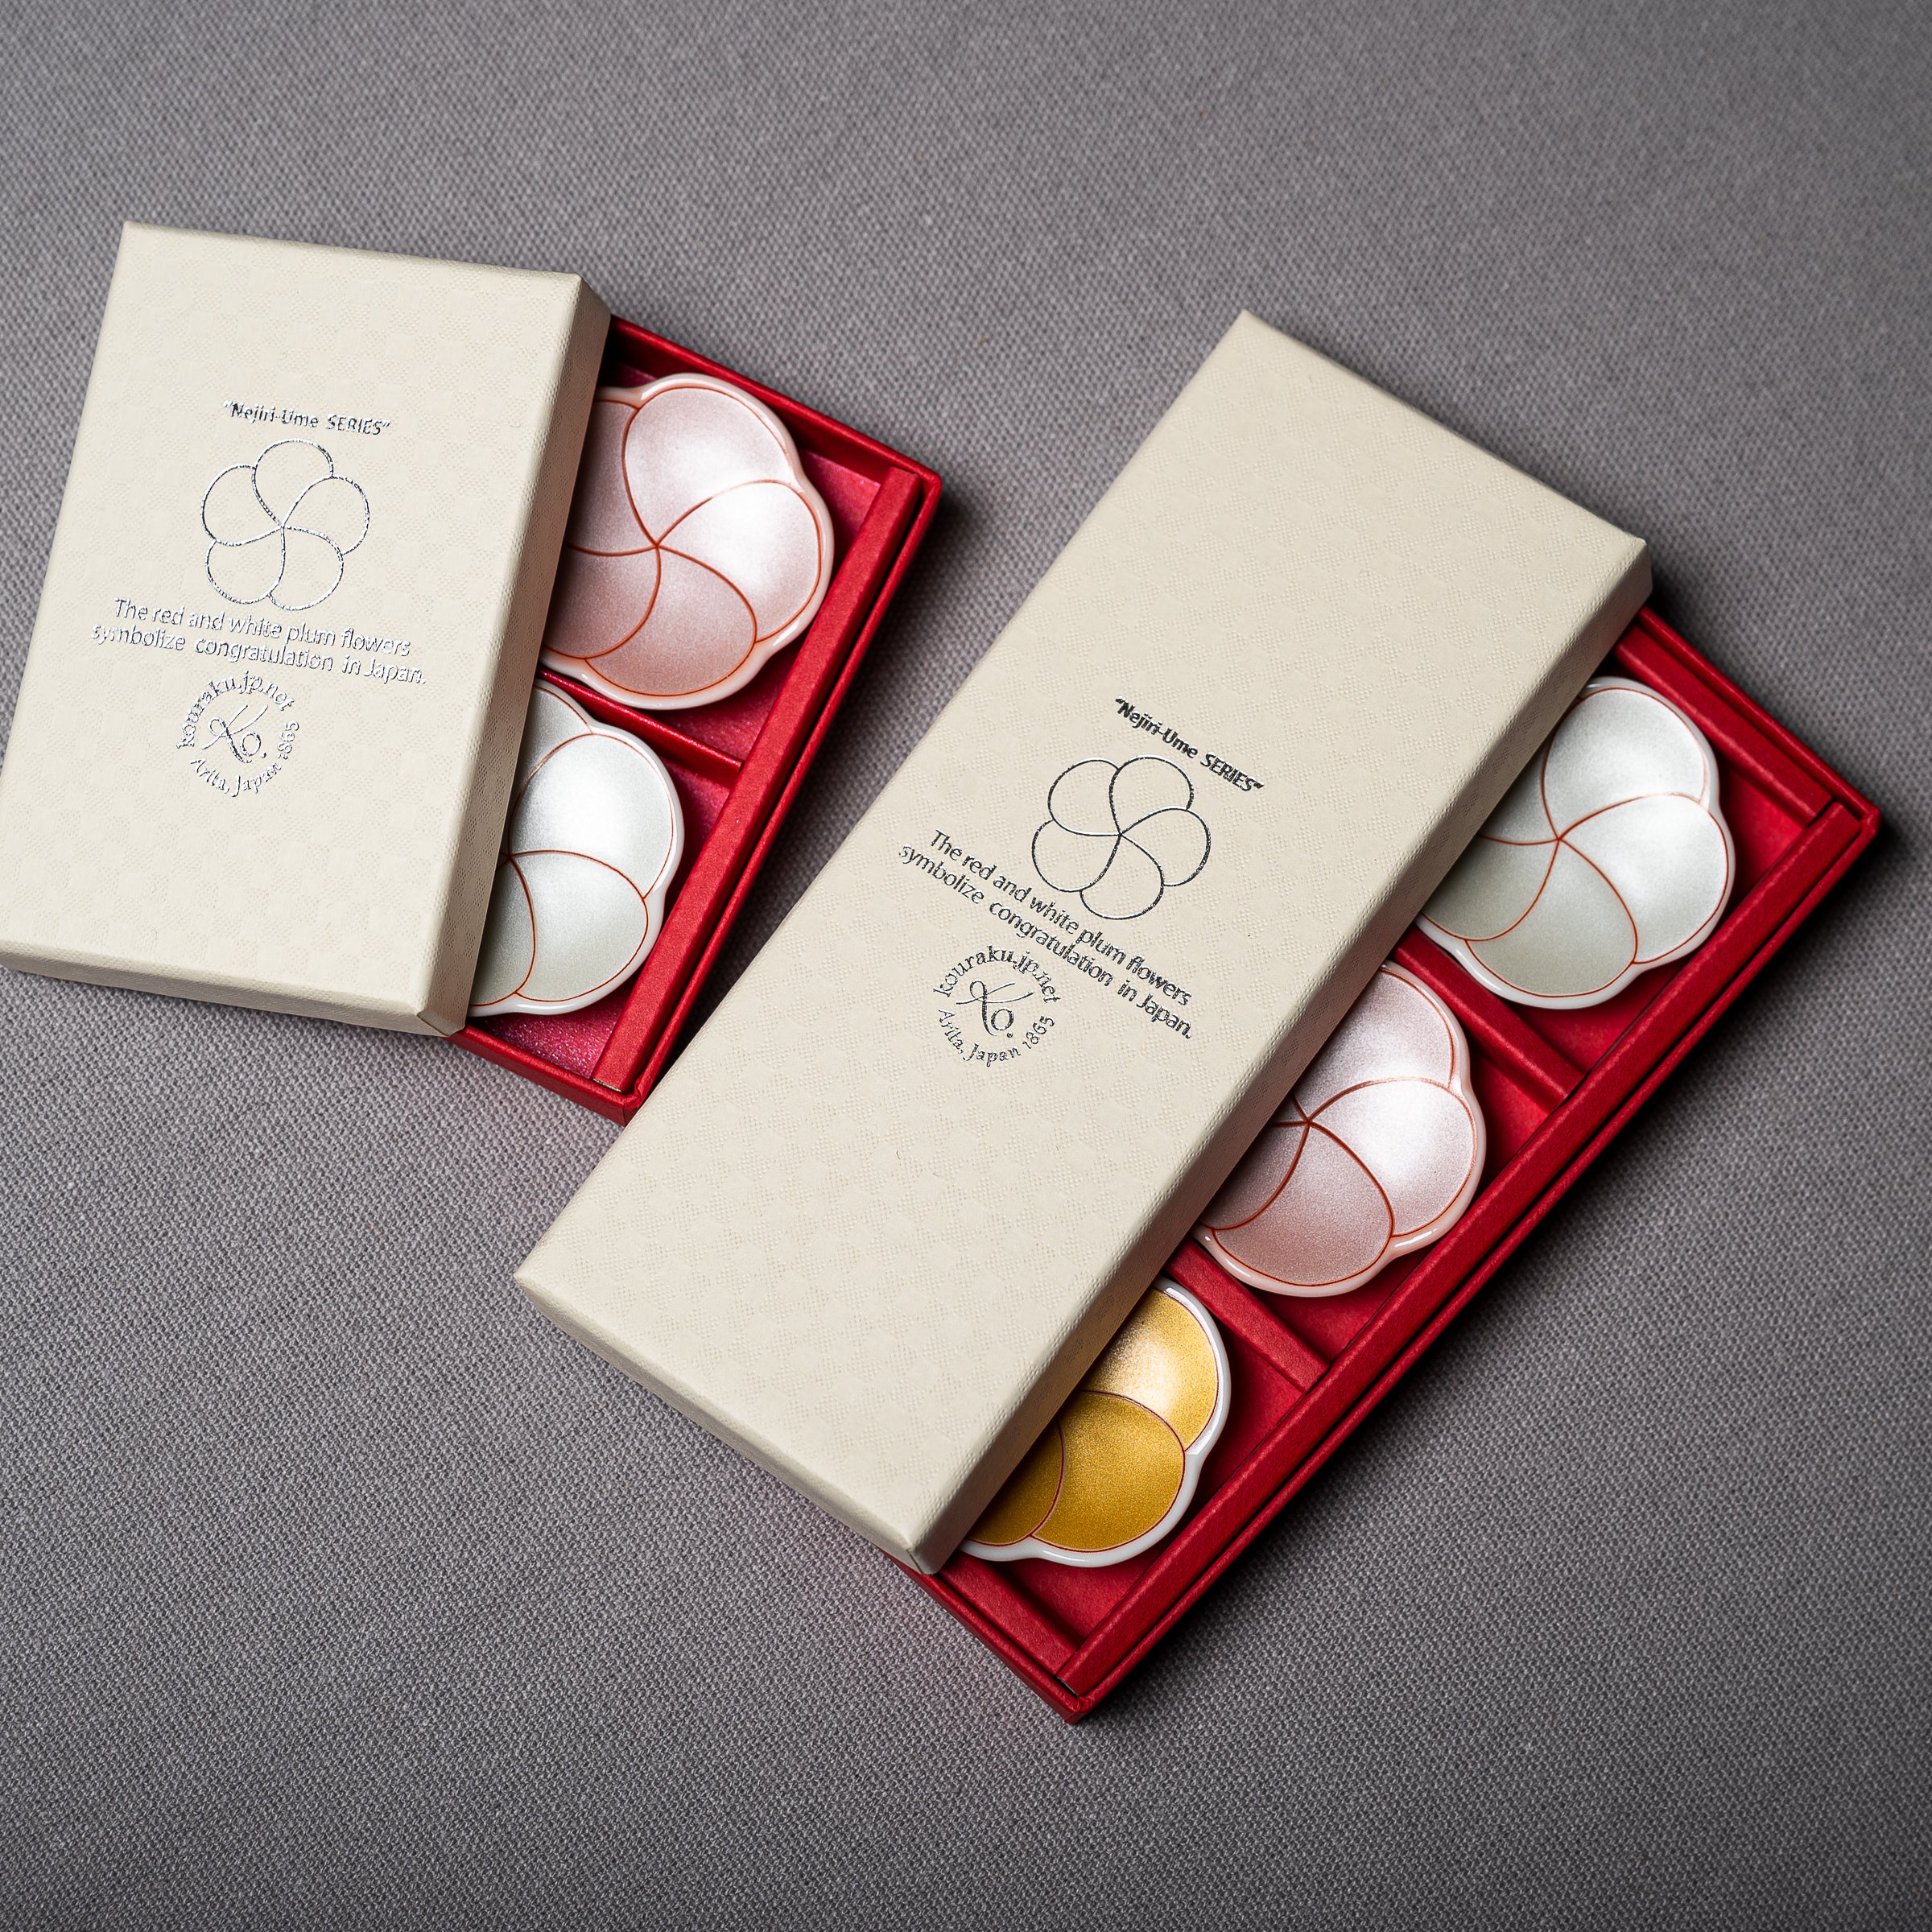 ARITAYAKI 有田焼 / Plum Chopstick Rest 2pcs with Gift Box